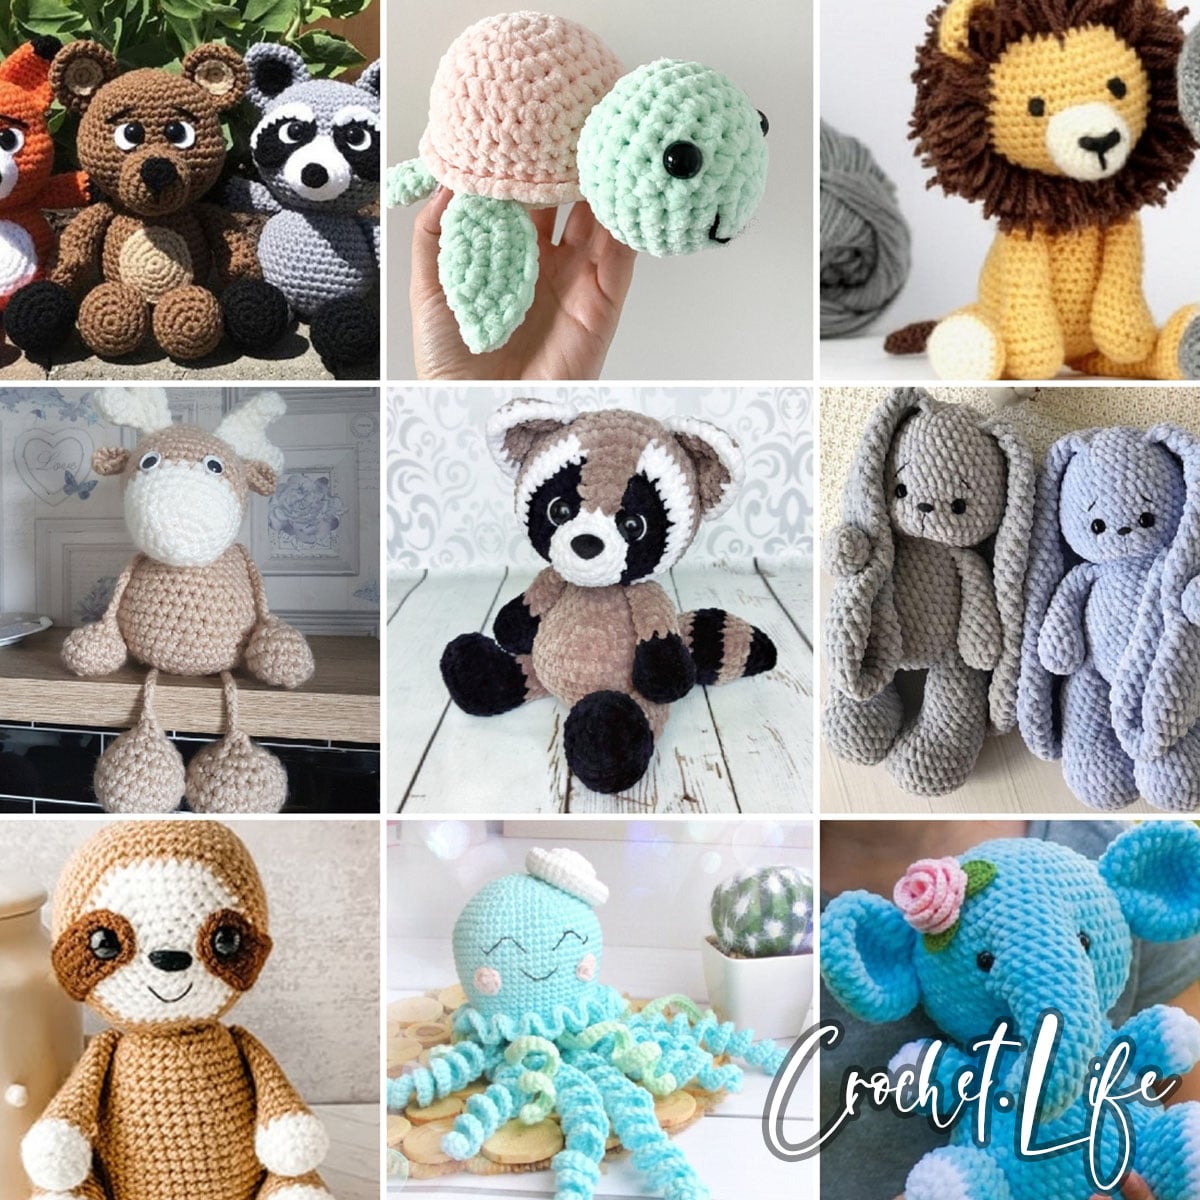 11 Adorable Animal Crochet Patterns - Crochet Life